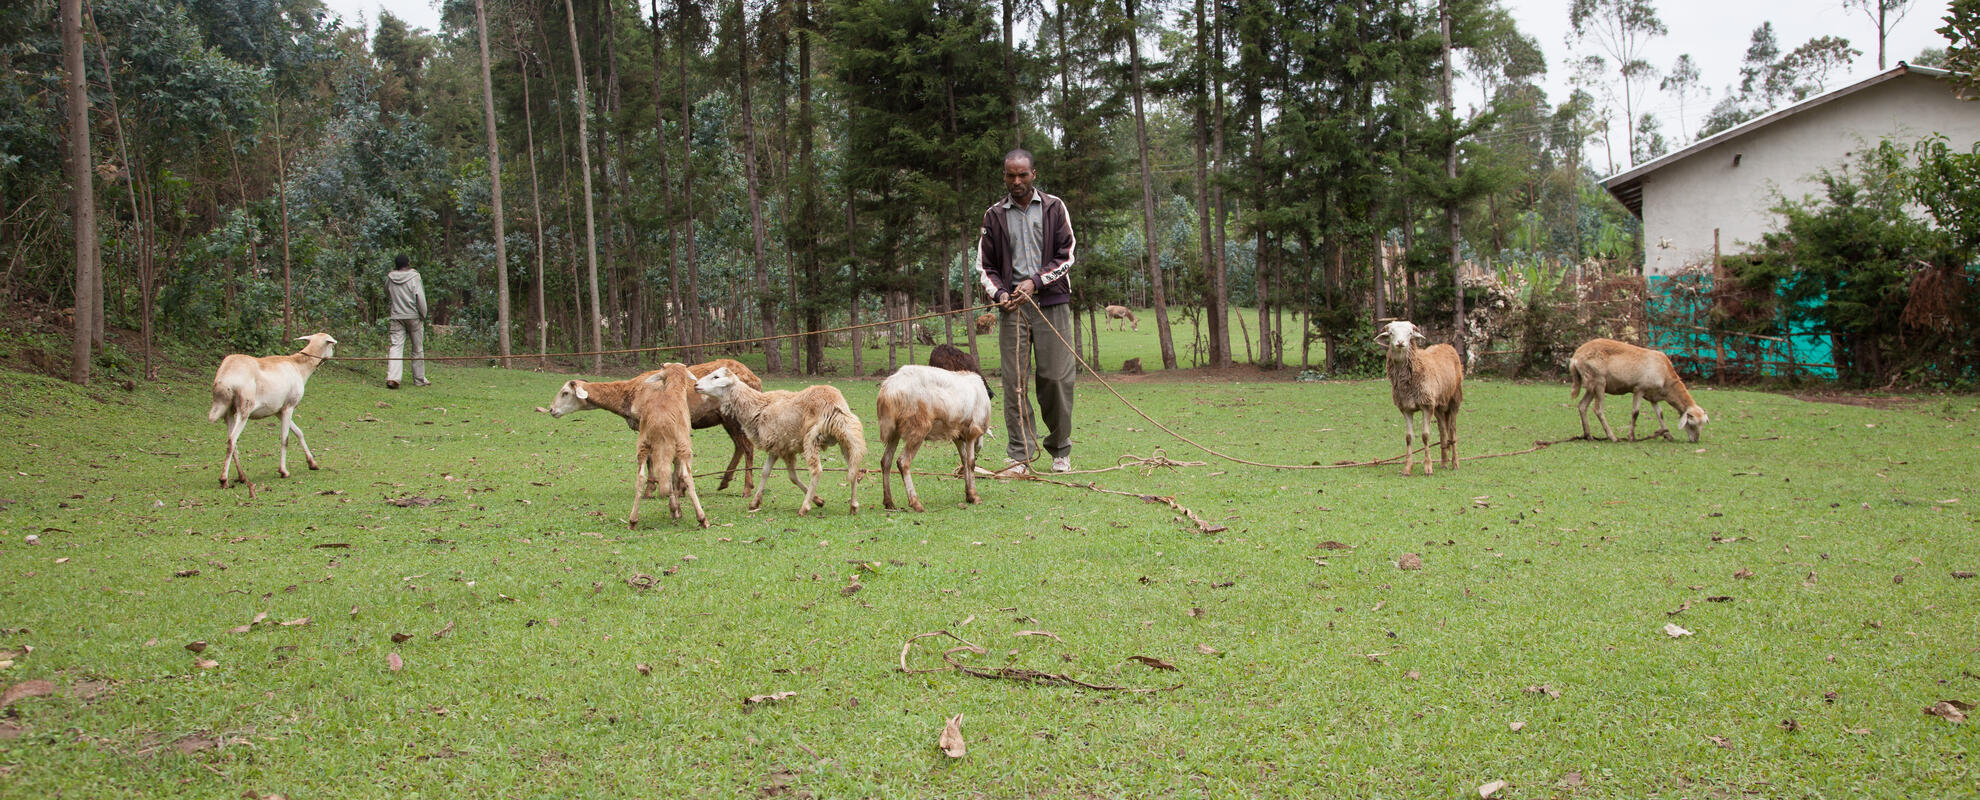 Feeding sheep, Doyogena, Ethiopia